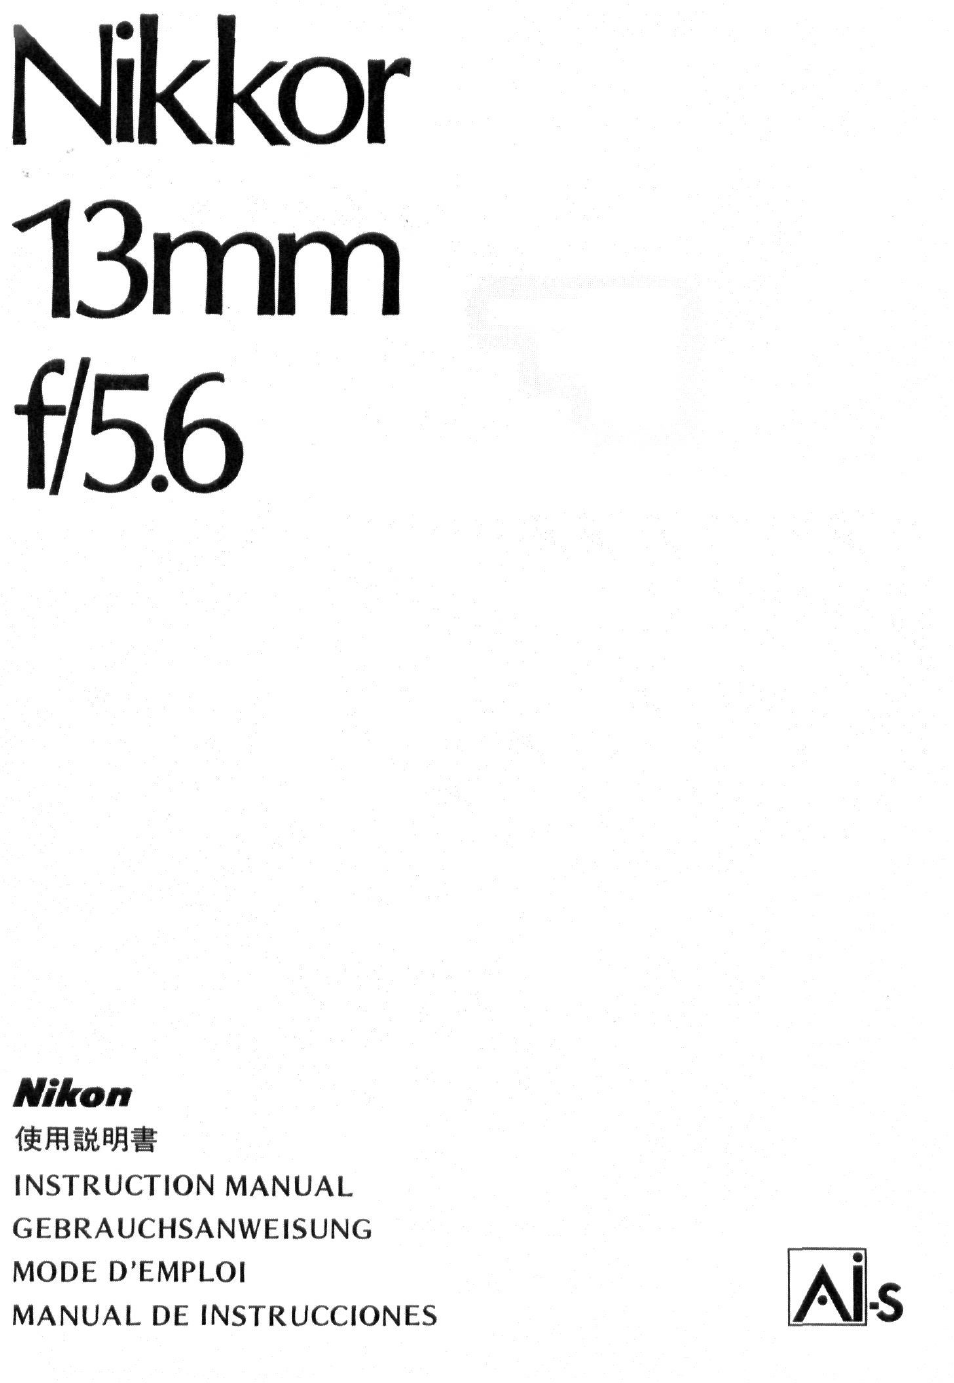 Nikon NIKKOR 13mm f-5.6 User Manual | 20 pages